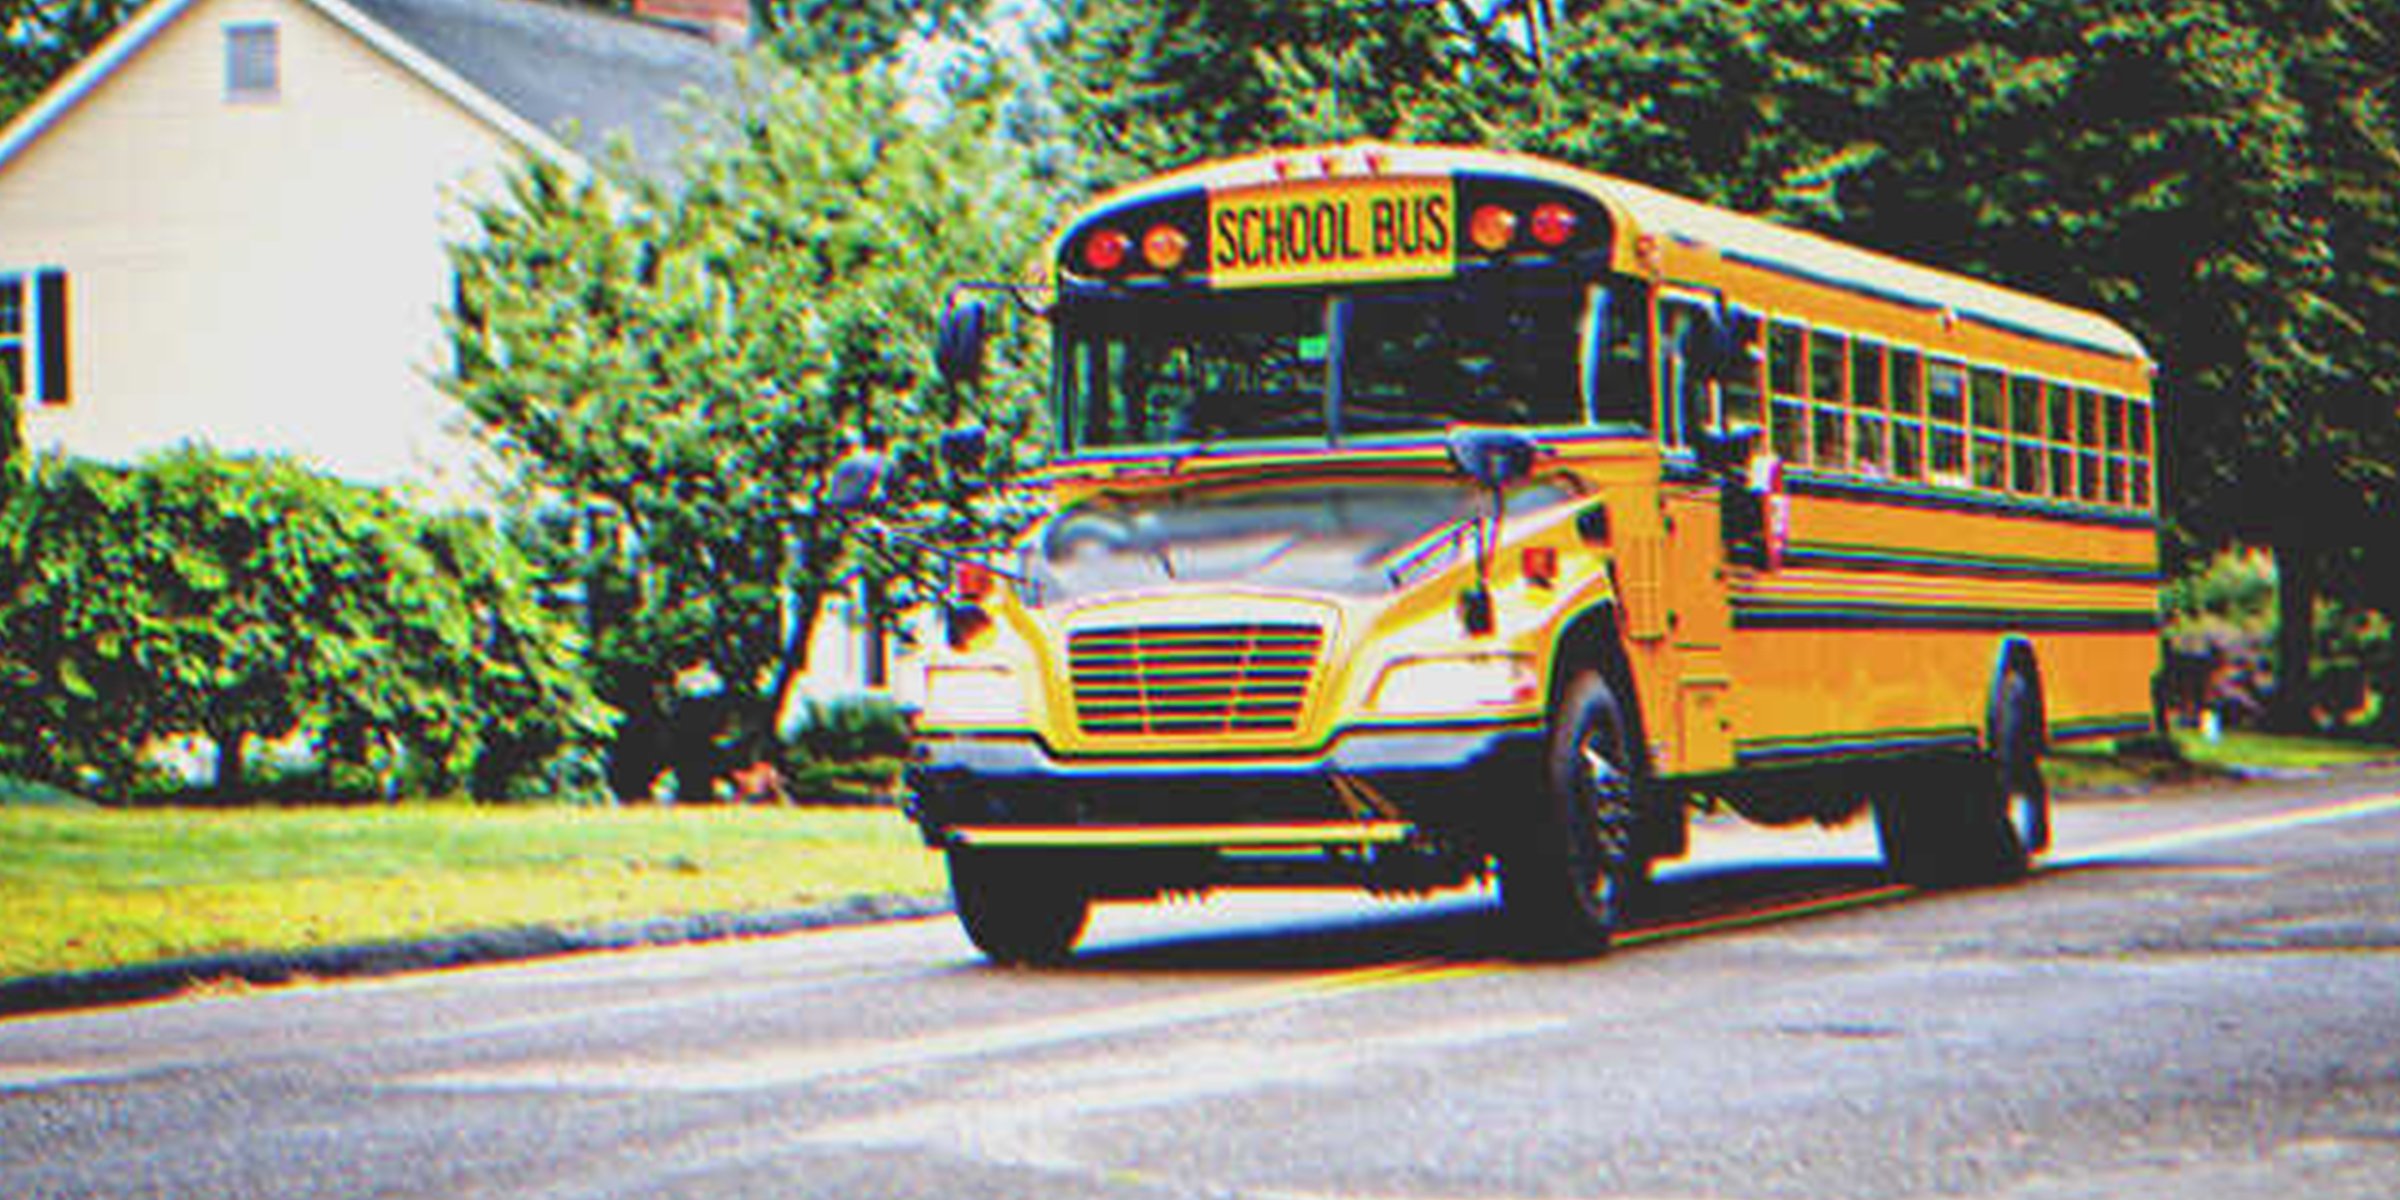 A school bus on the street | Source: Shutterstock